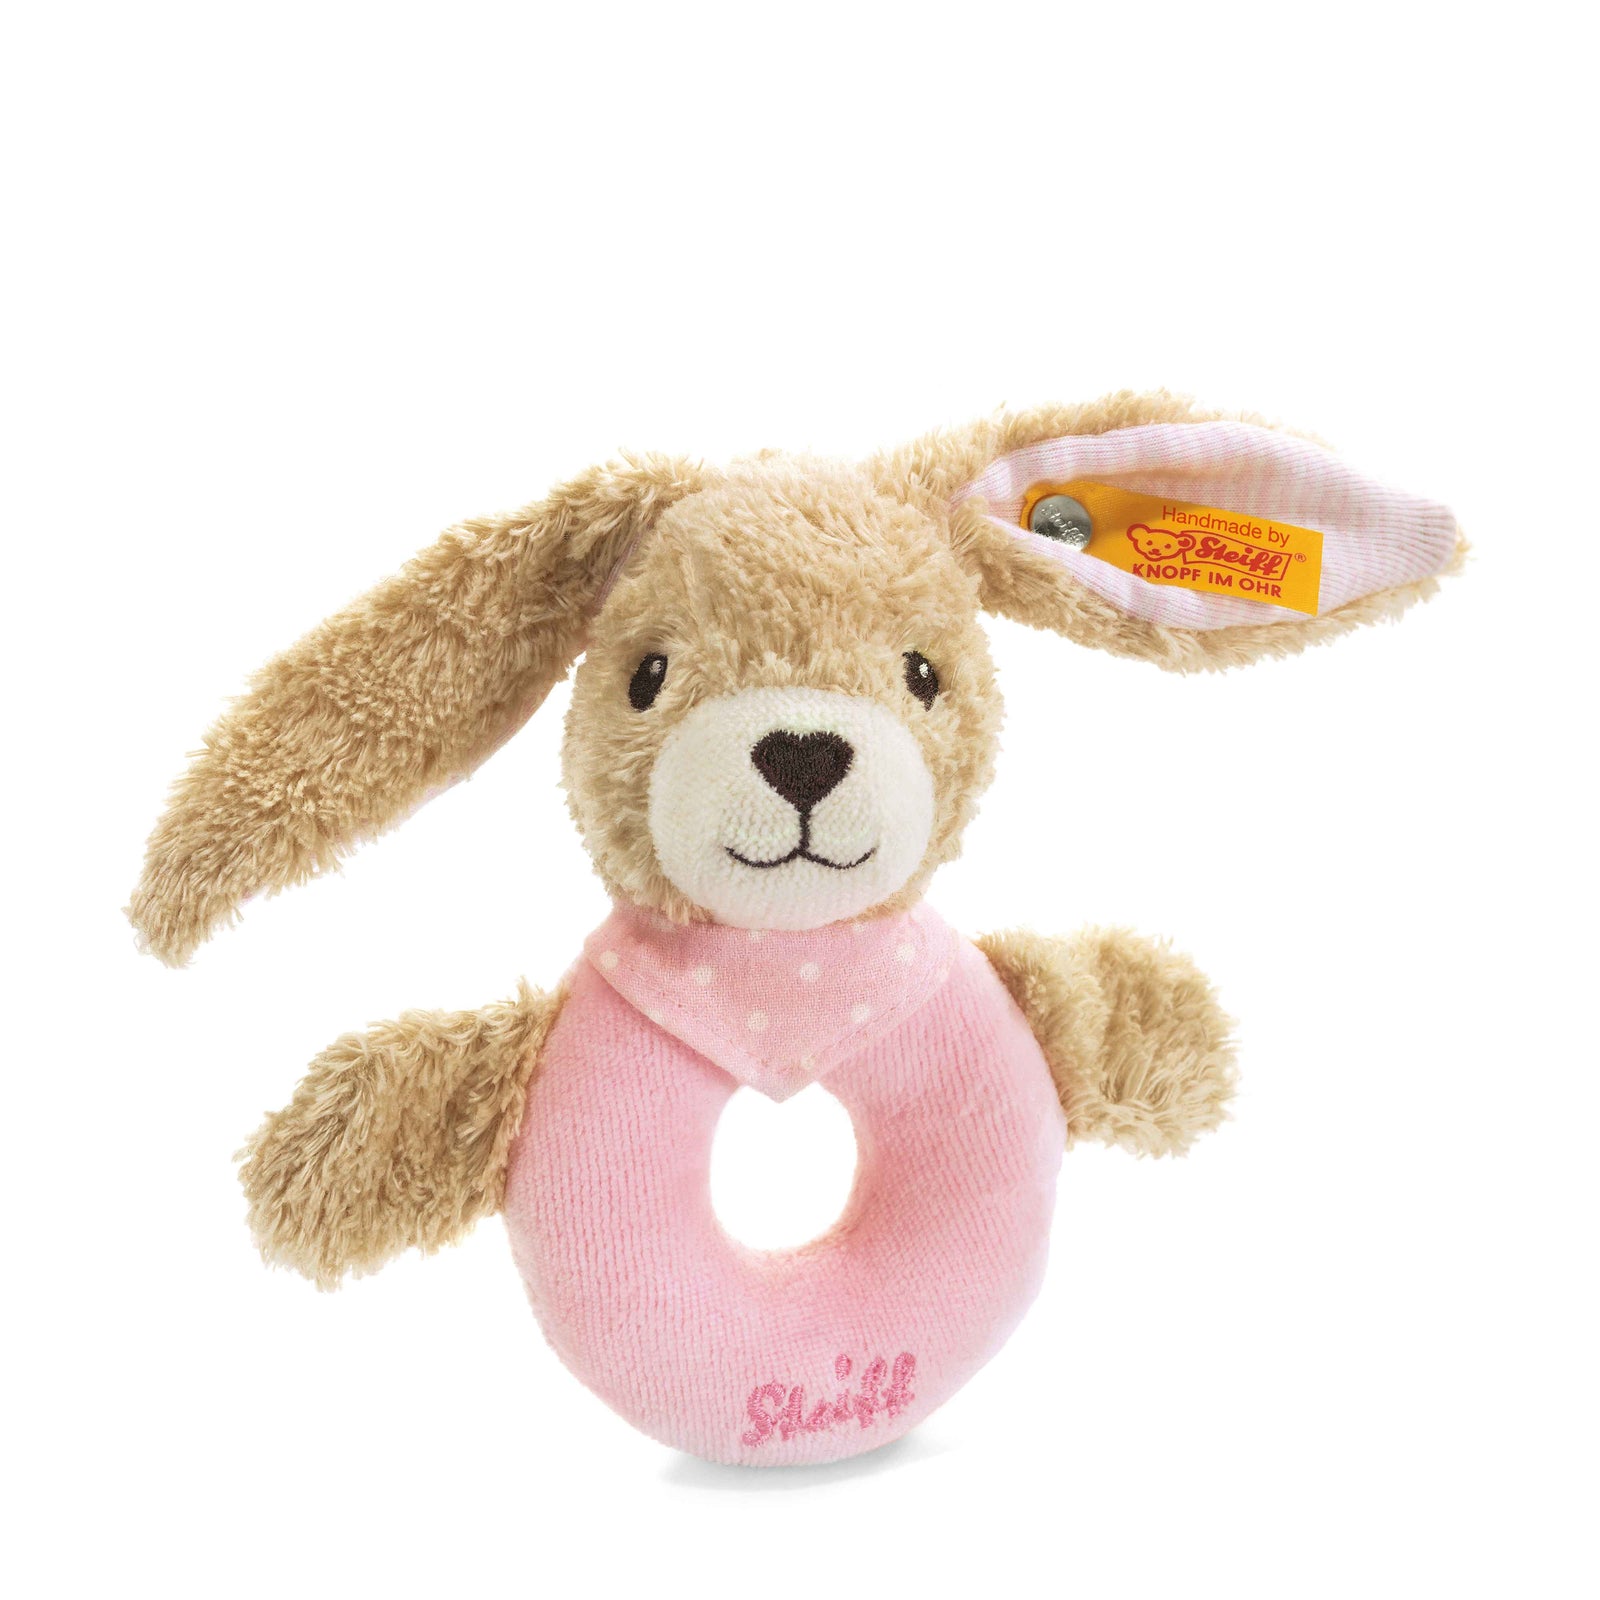 Steiff Hoppel Rabbit Grip Toy with Rattle - EAN 237591